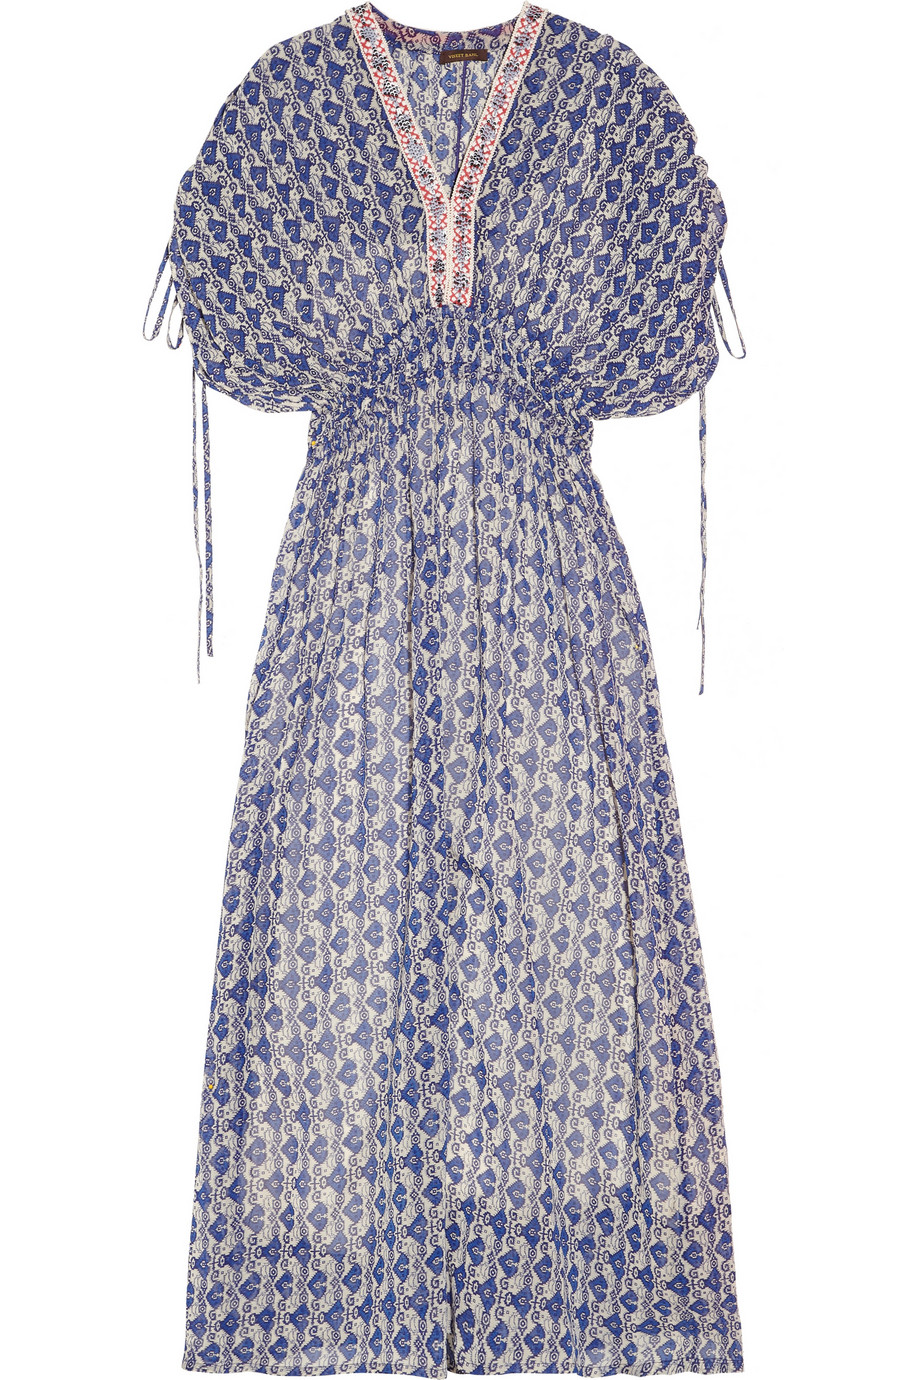 Vineet Bahl Embellished Chiffon Maxi Dress in Blue | Lyst